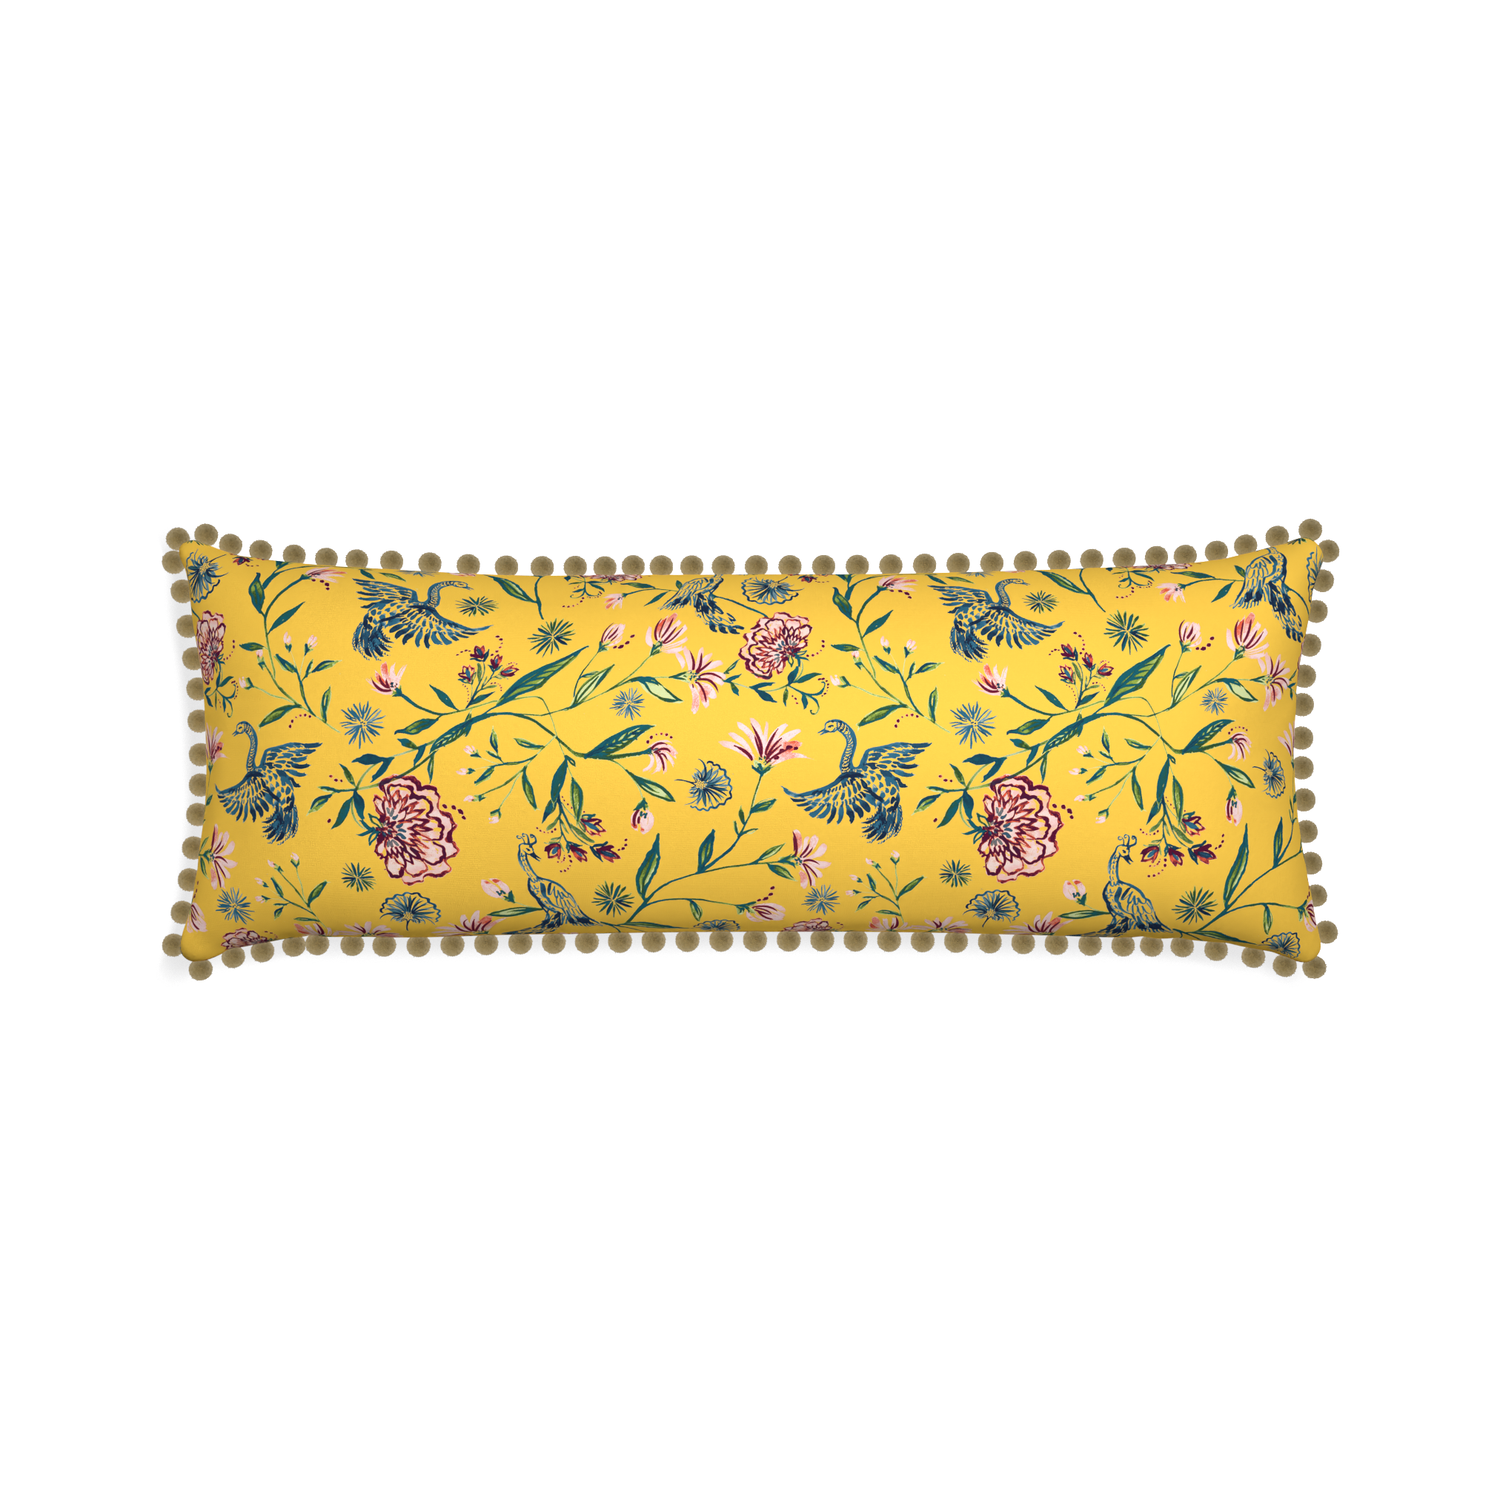 Xl-lumbar daphne canary custom pillow with olive pom pom on white background